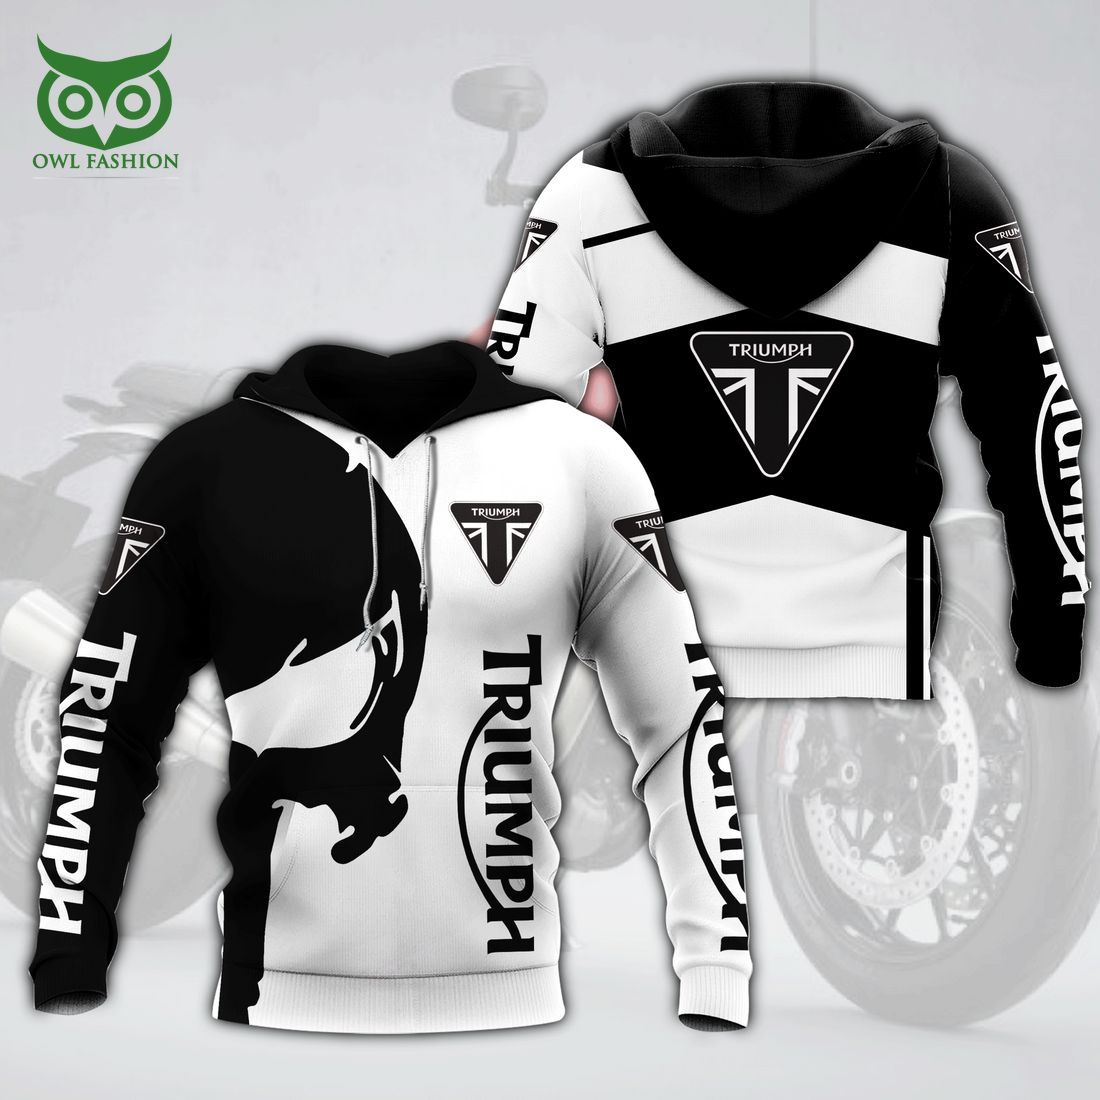 triumph motorcycles black and white logo 3d shirt 1 Uask3